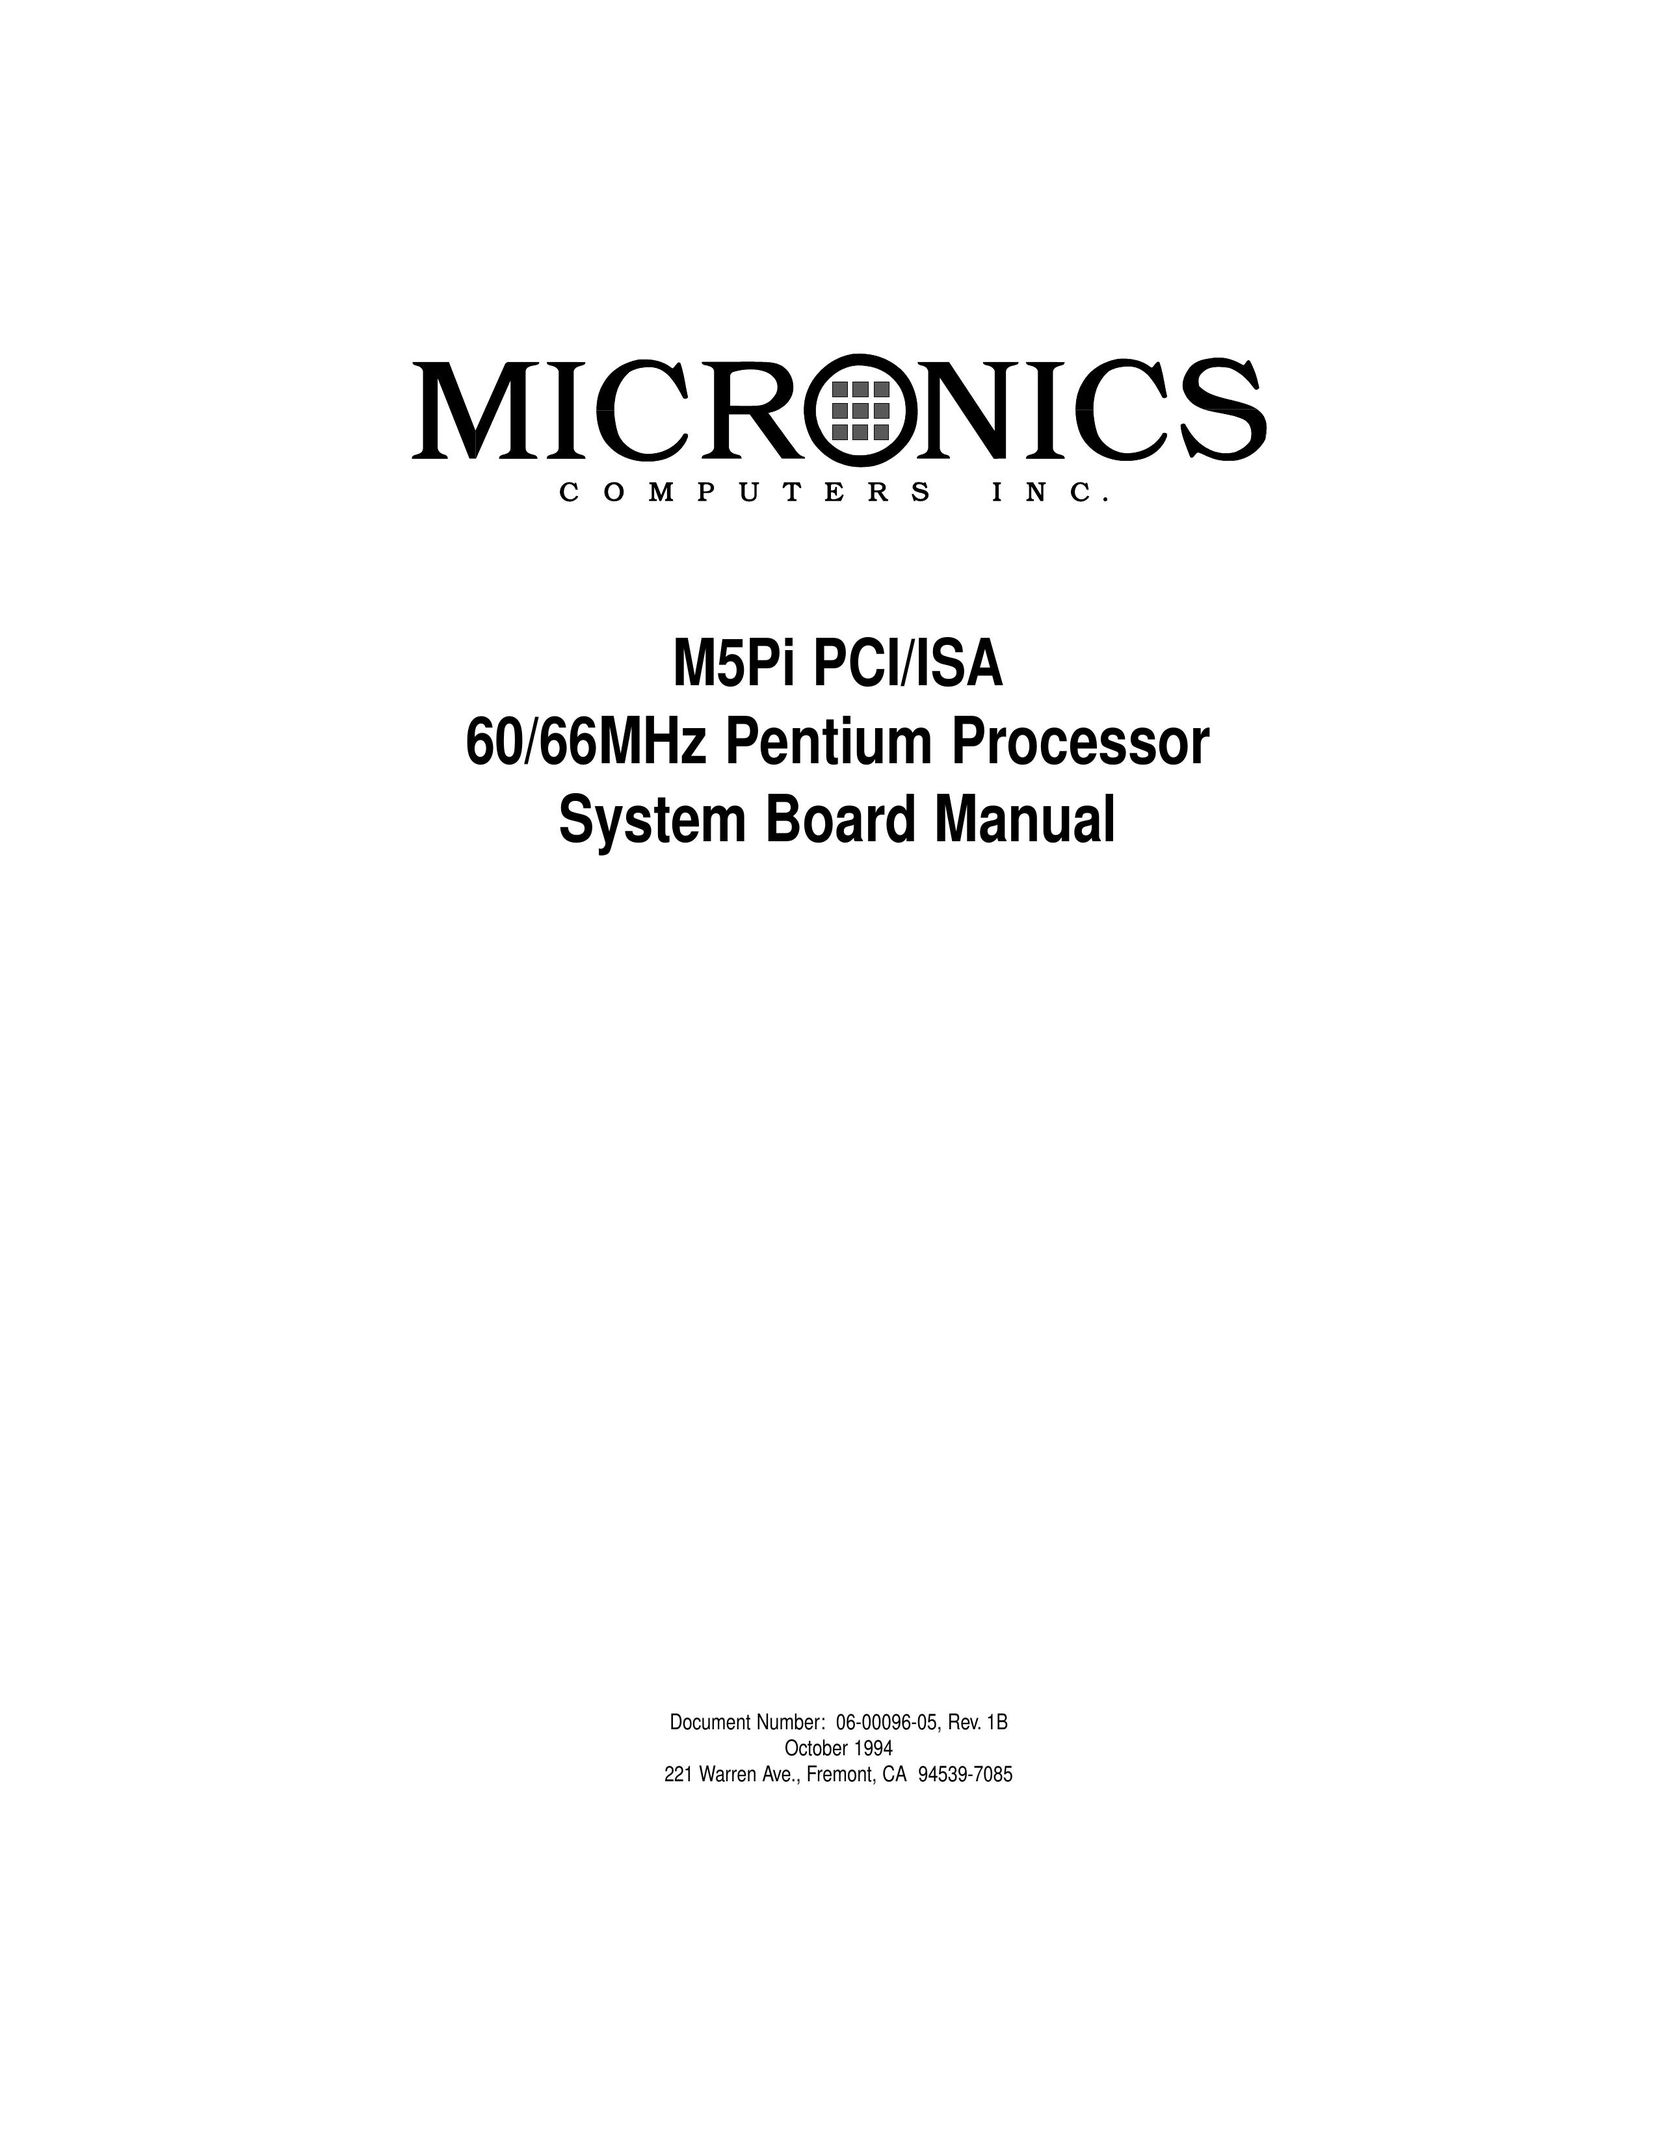 Micronics M5Pi PCI/ISA Computer Hardware User Manual